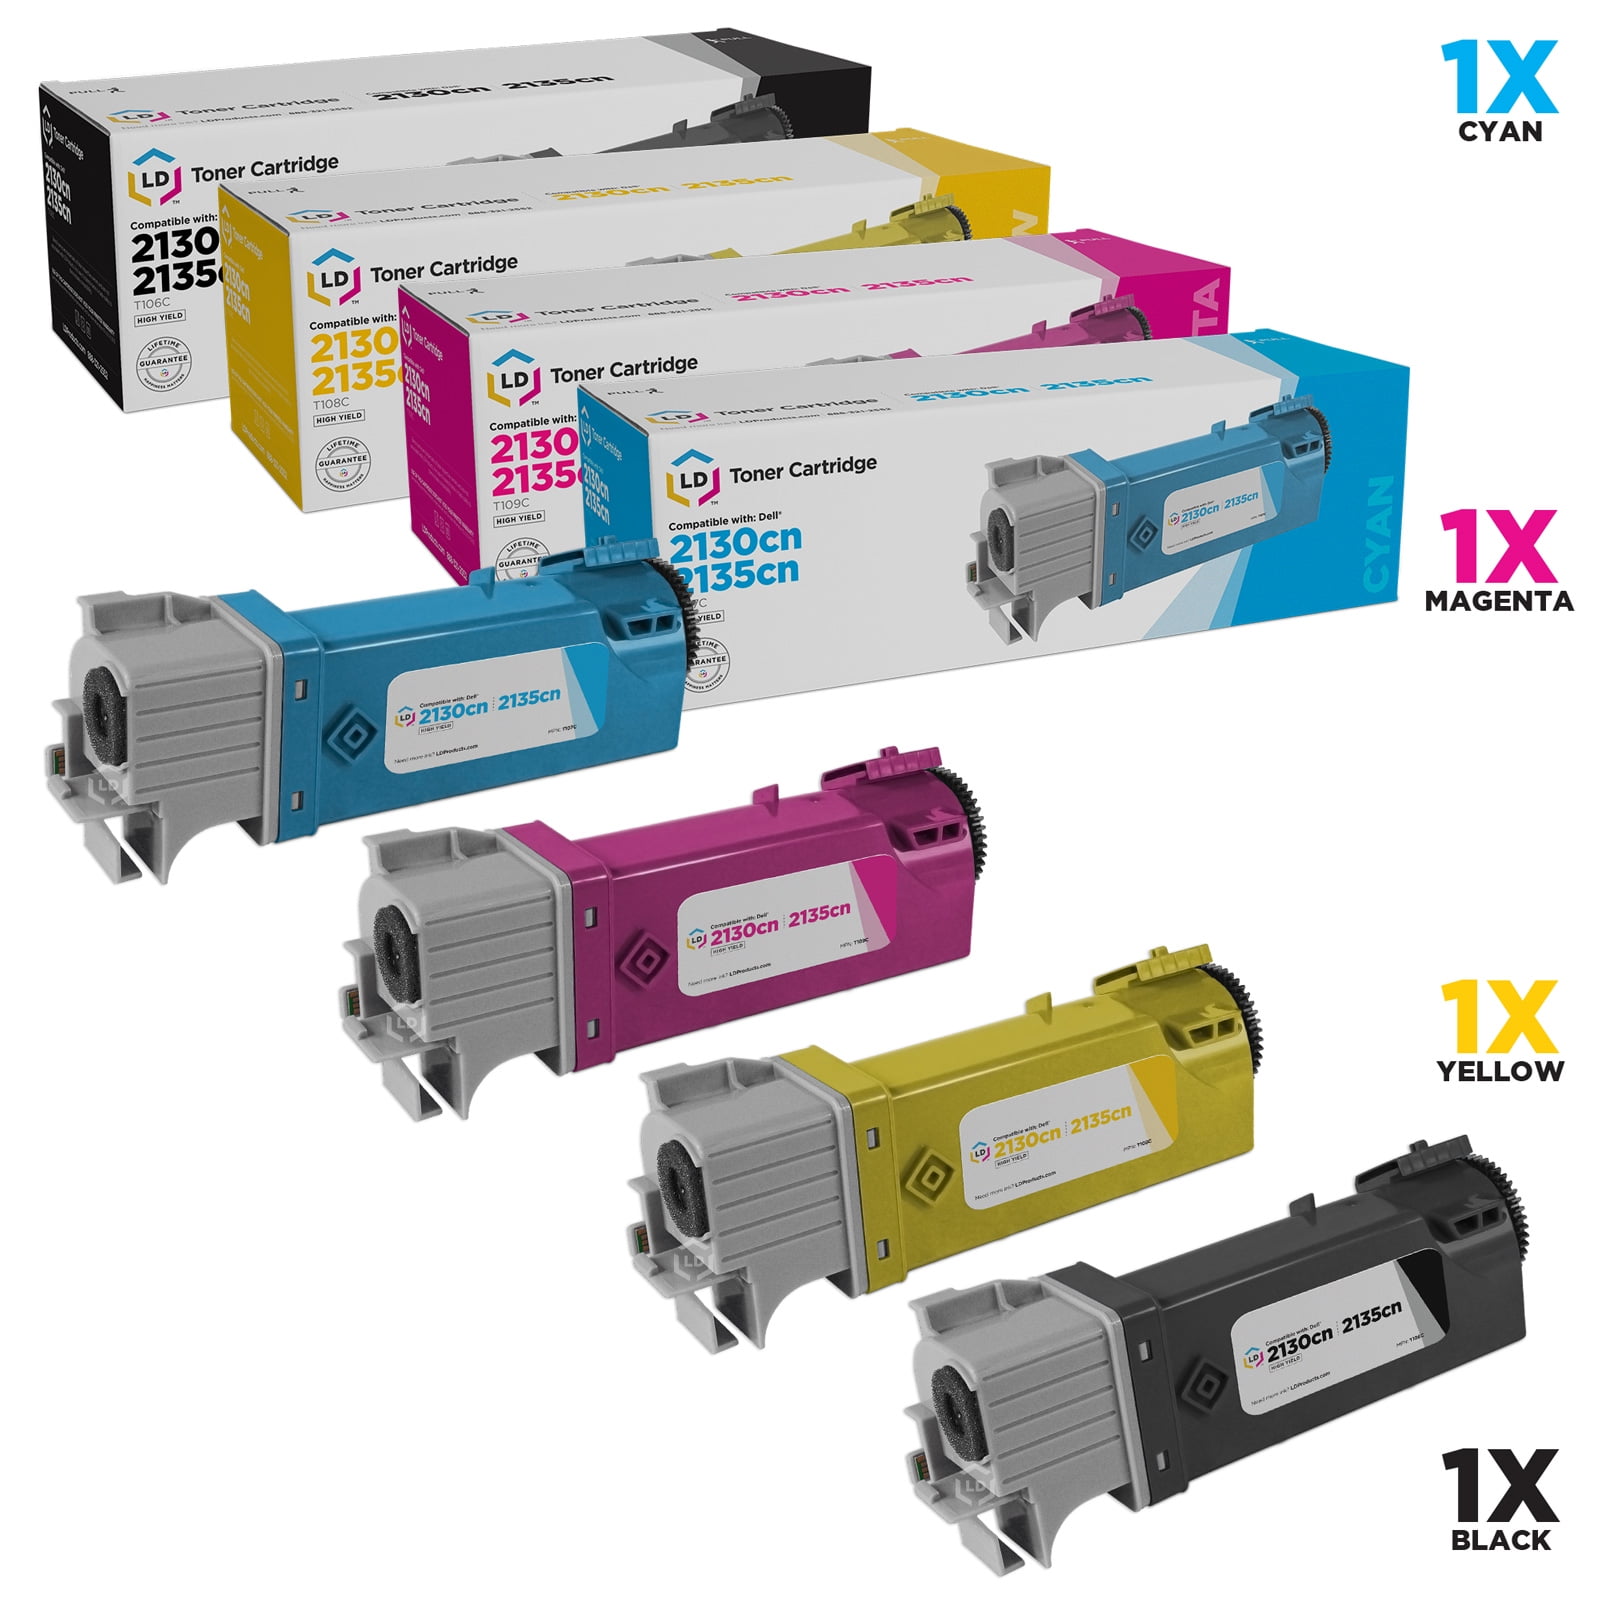 New Black Cyan Yellow Magenta Laser Toner Cartridge Set for Dell 1320c Printer 